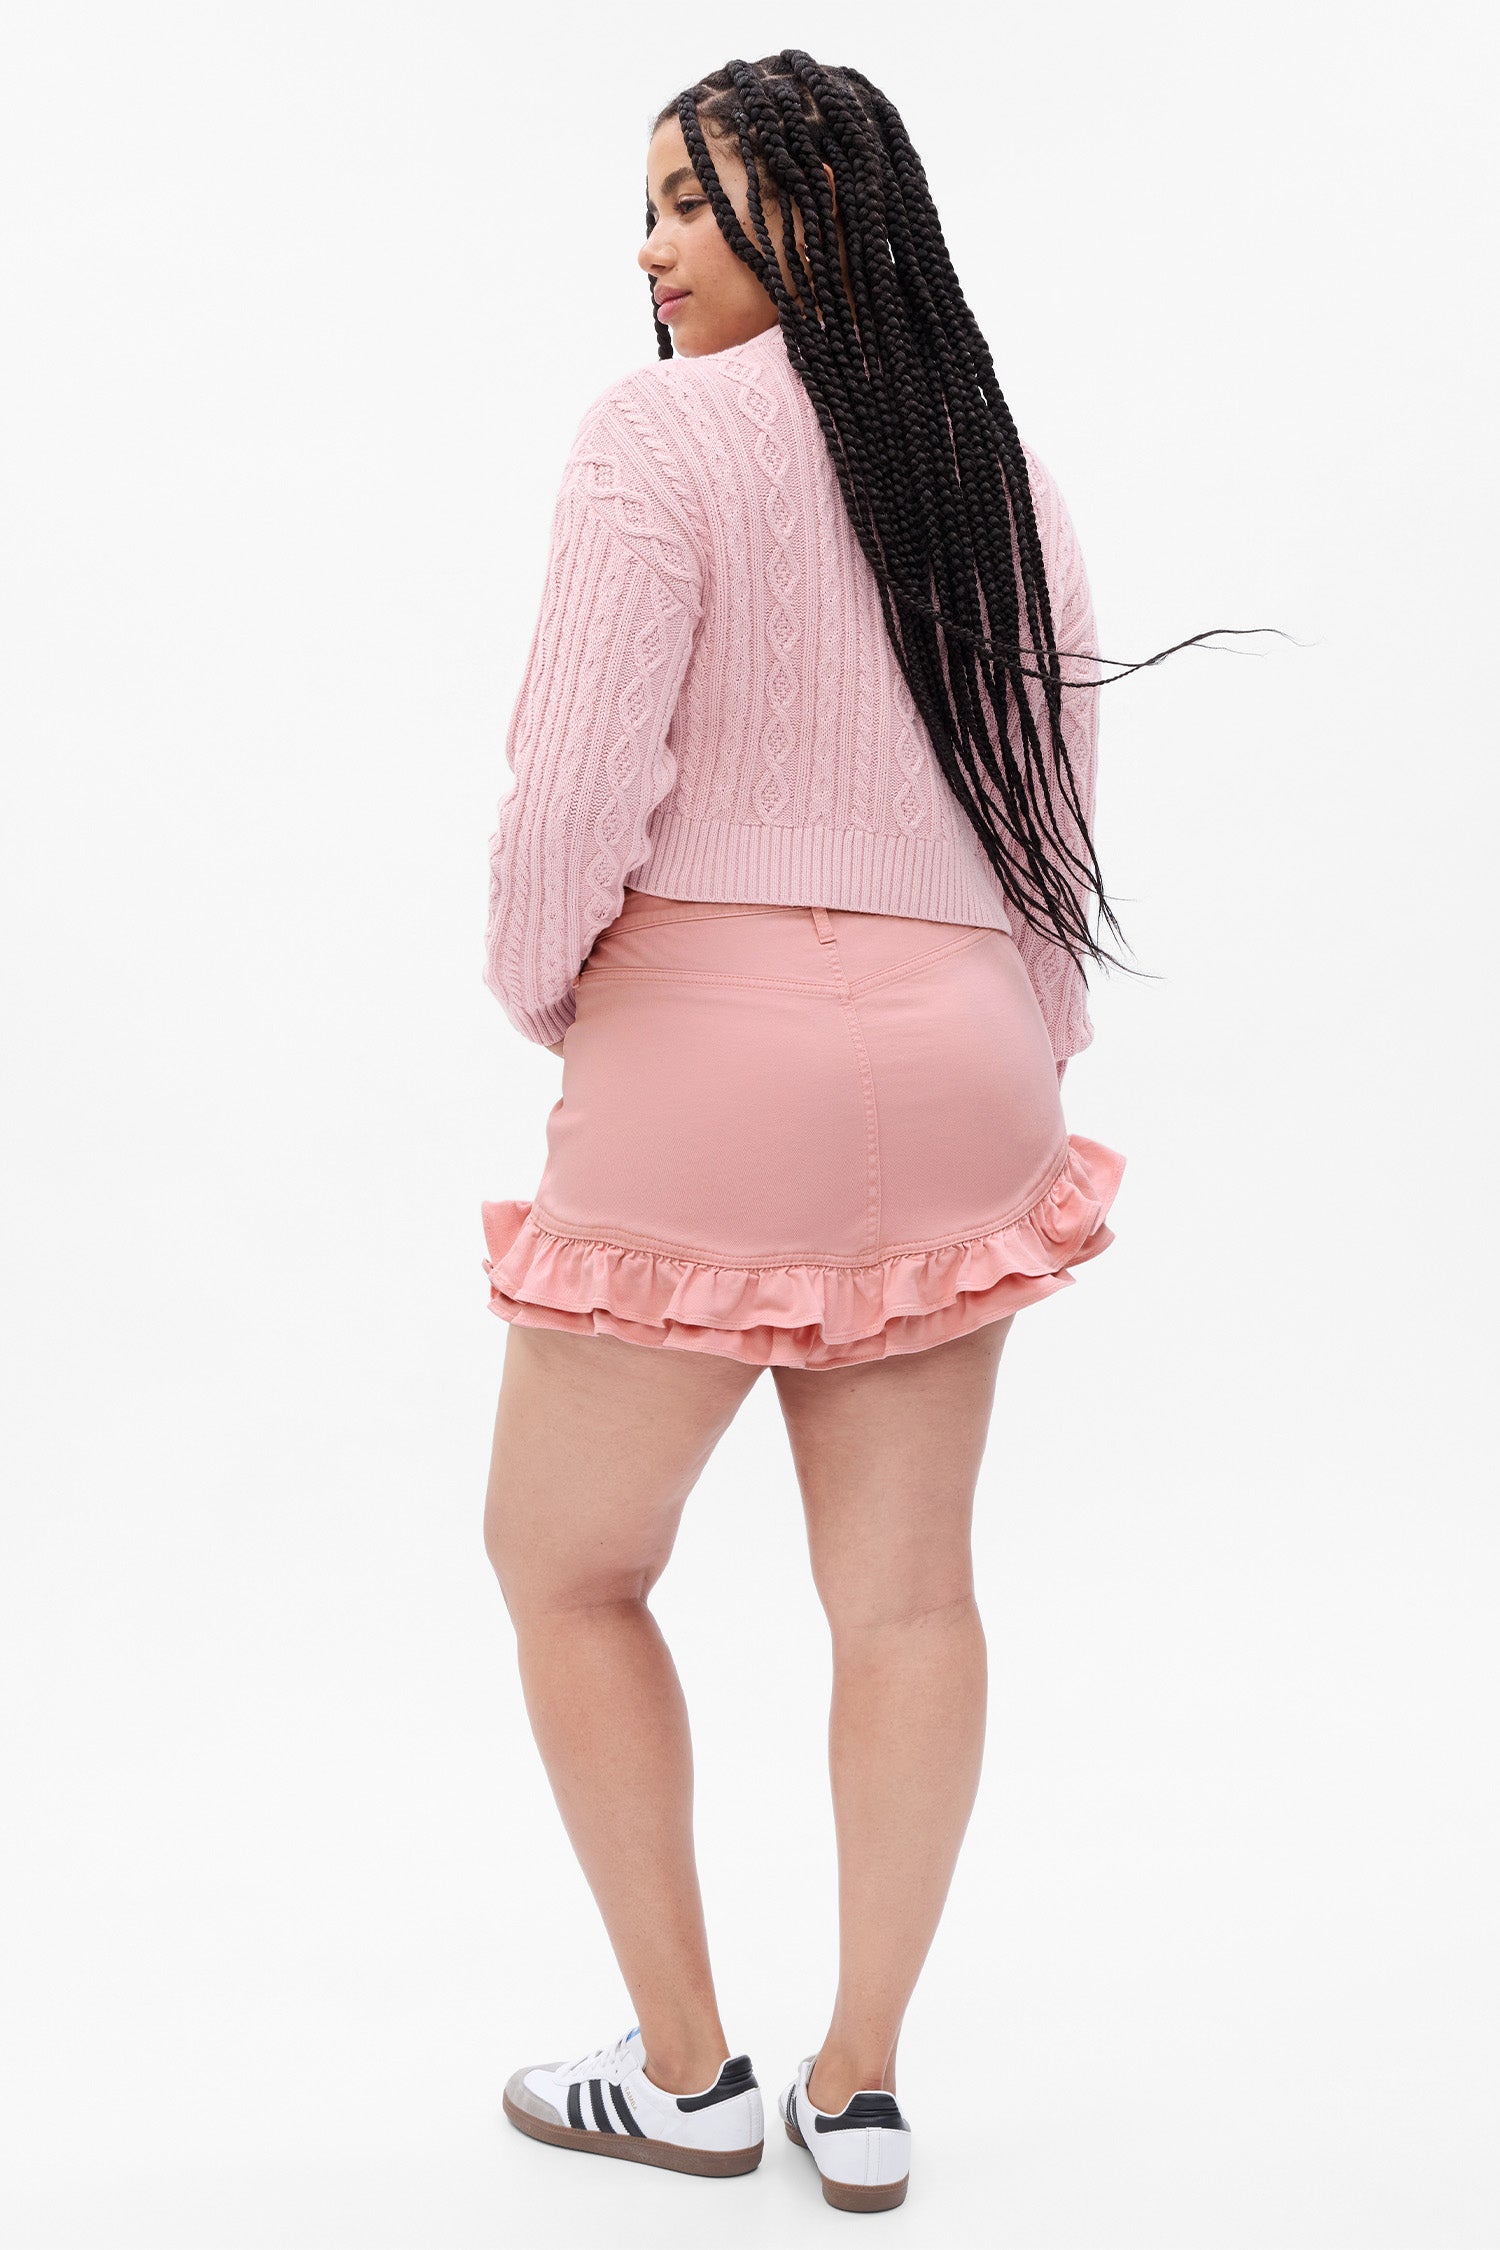 Back image of model wearing pink denim mini skirt with ruffle detail at hem